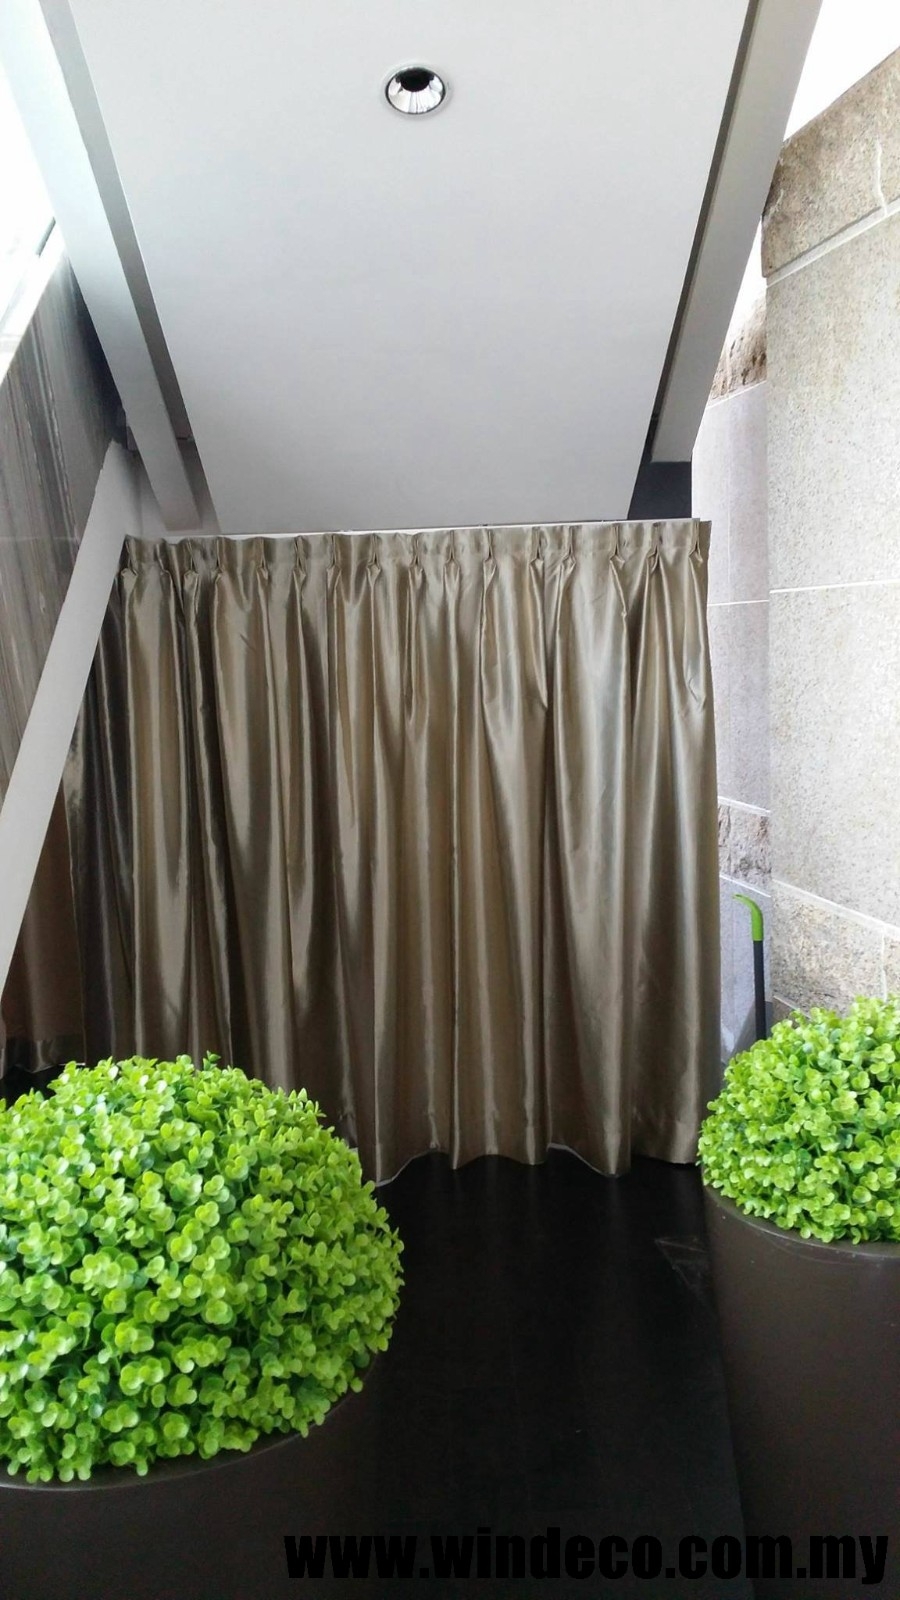 Johor Bahru Curtain Design Reference  Johor Bahru Curtain Works Sample Curtain & Blinds Malaysia Reference Renovation Design 